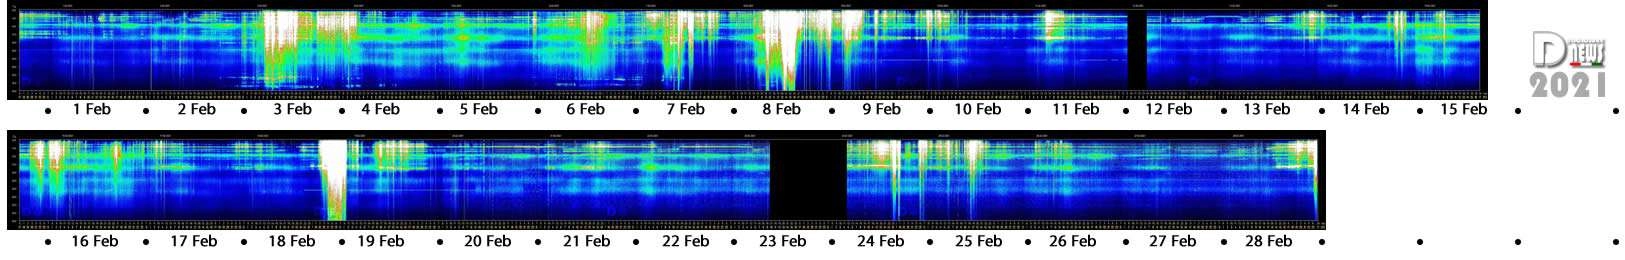 Schumann Resonance Stripe February 2021